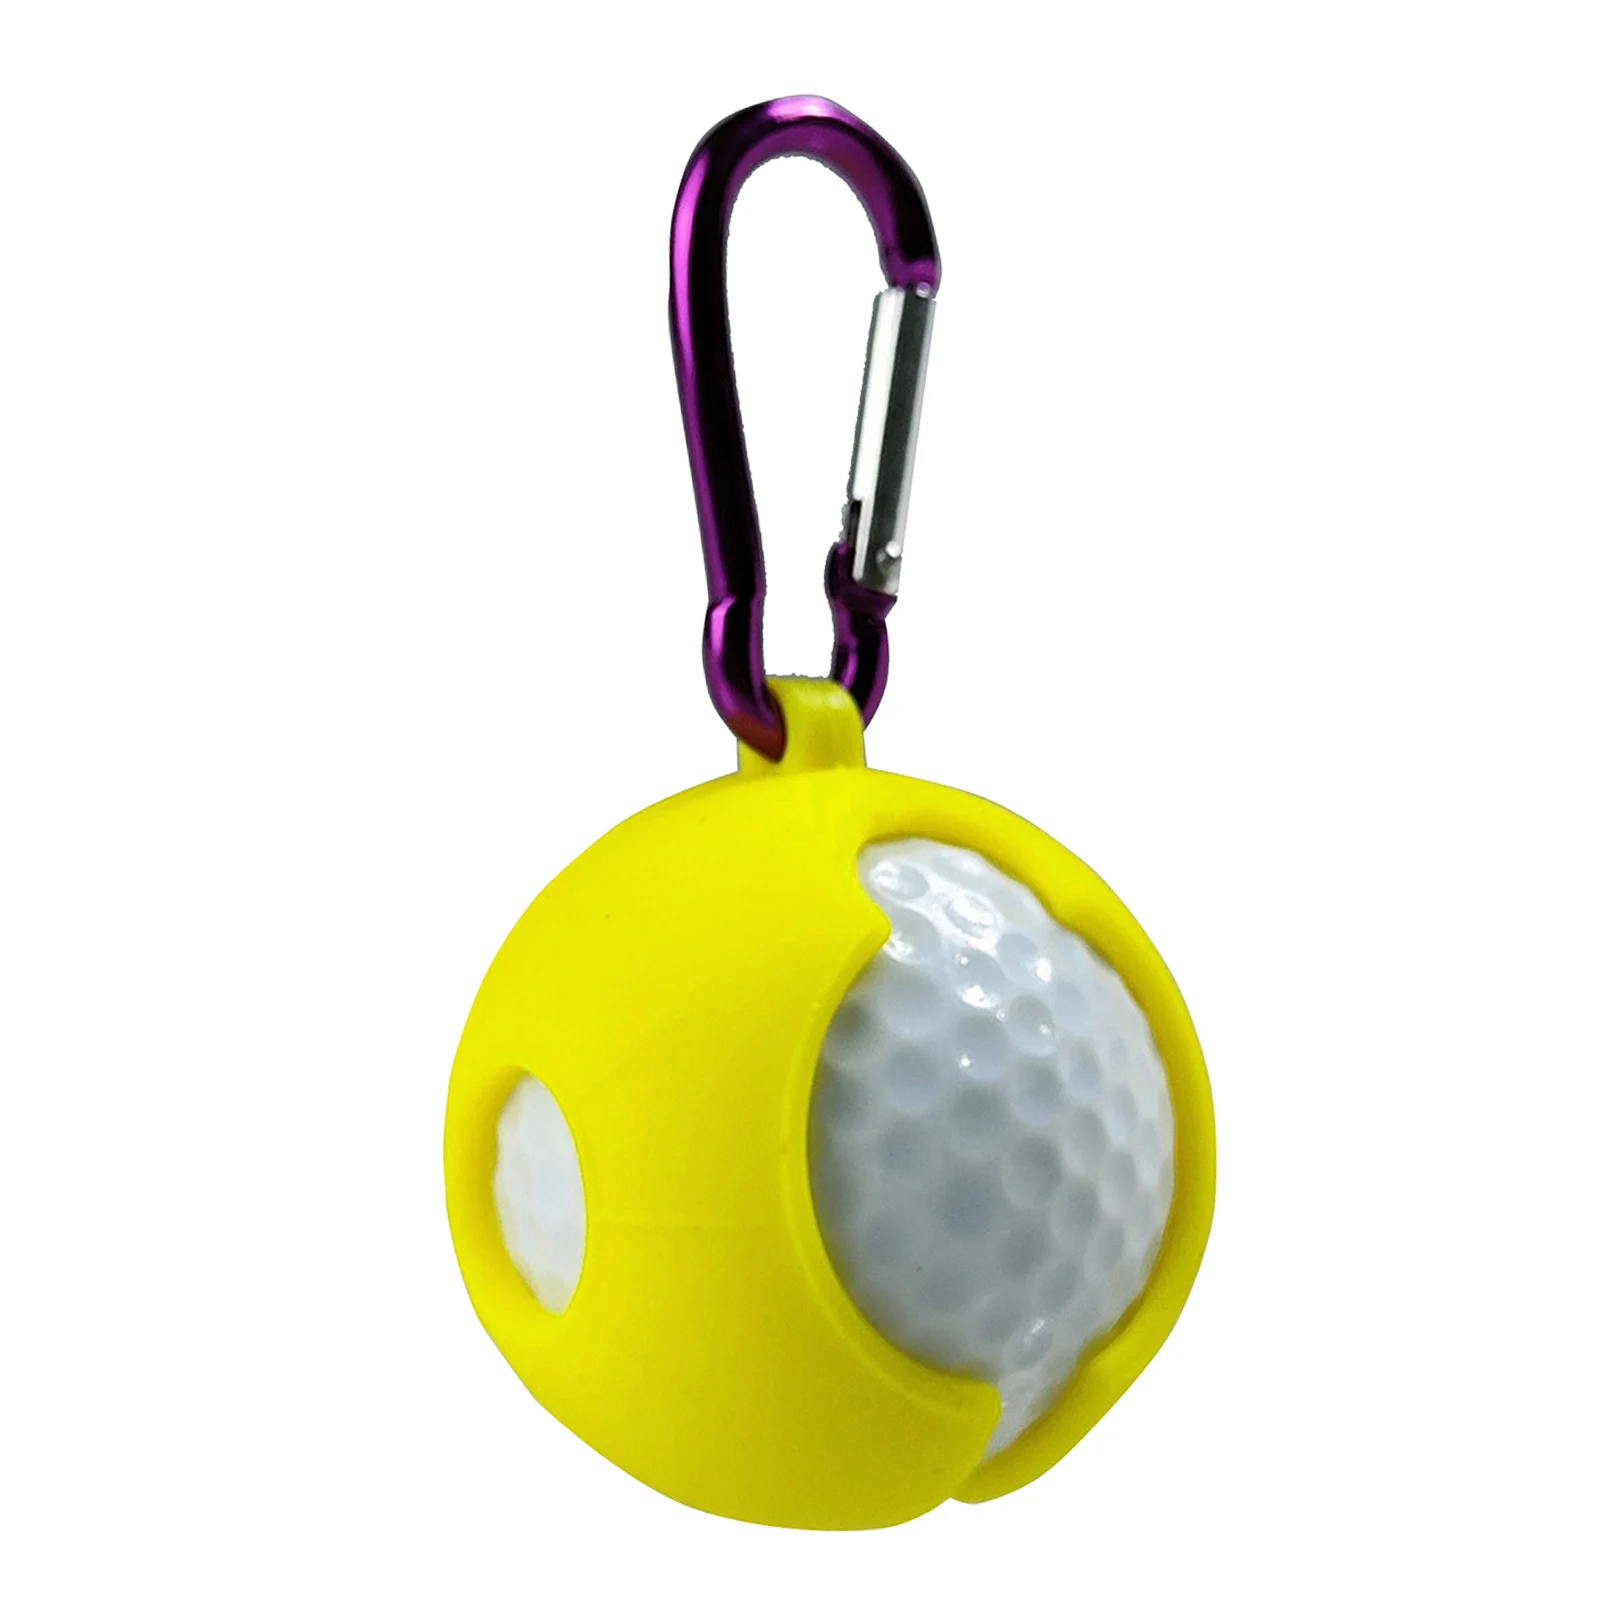 

Golf Ball Silicone Holder Golf Ball Storage Pouch Silicone Holder Container Carrier Carry Bag For One Golf Ball Golfing